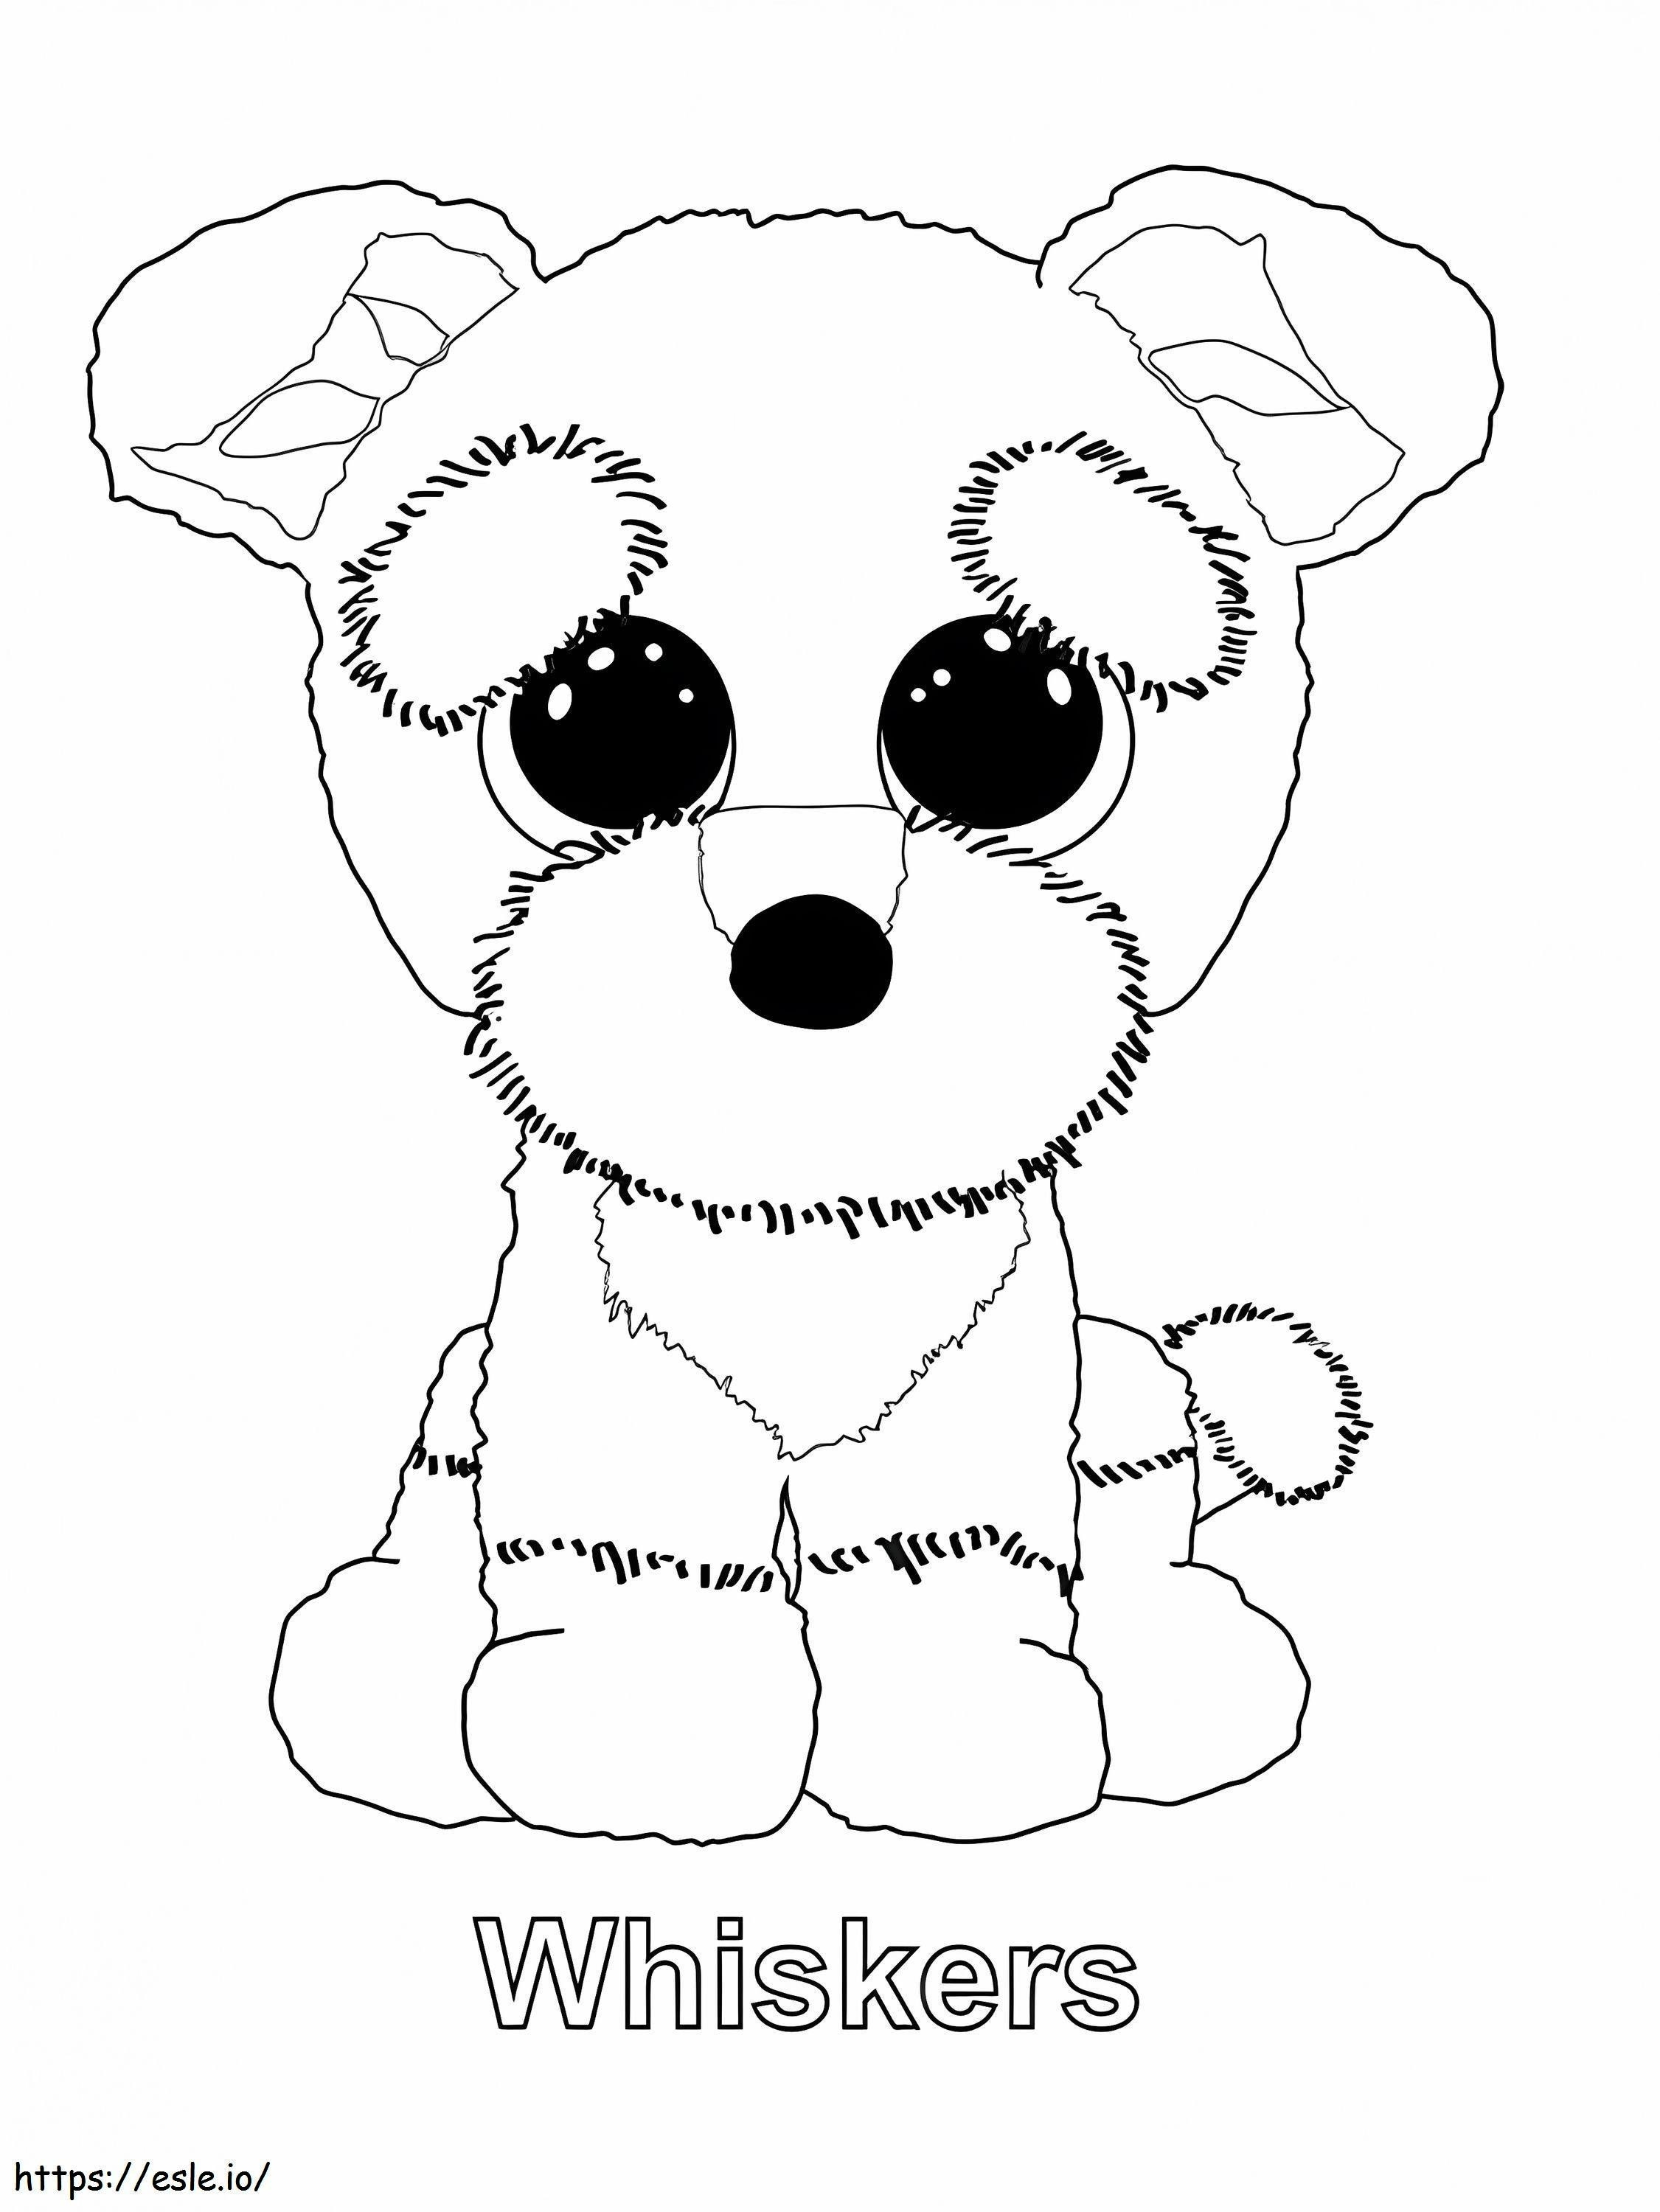 1584153661 Beanie Boo Precioso Cachorro Lindo Theog De Imágenes Abucheos Que La Gente Dibuja Gratis para colorear